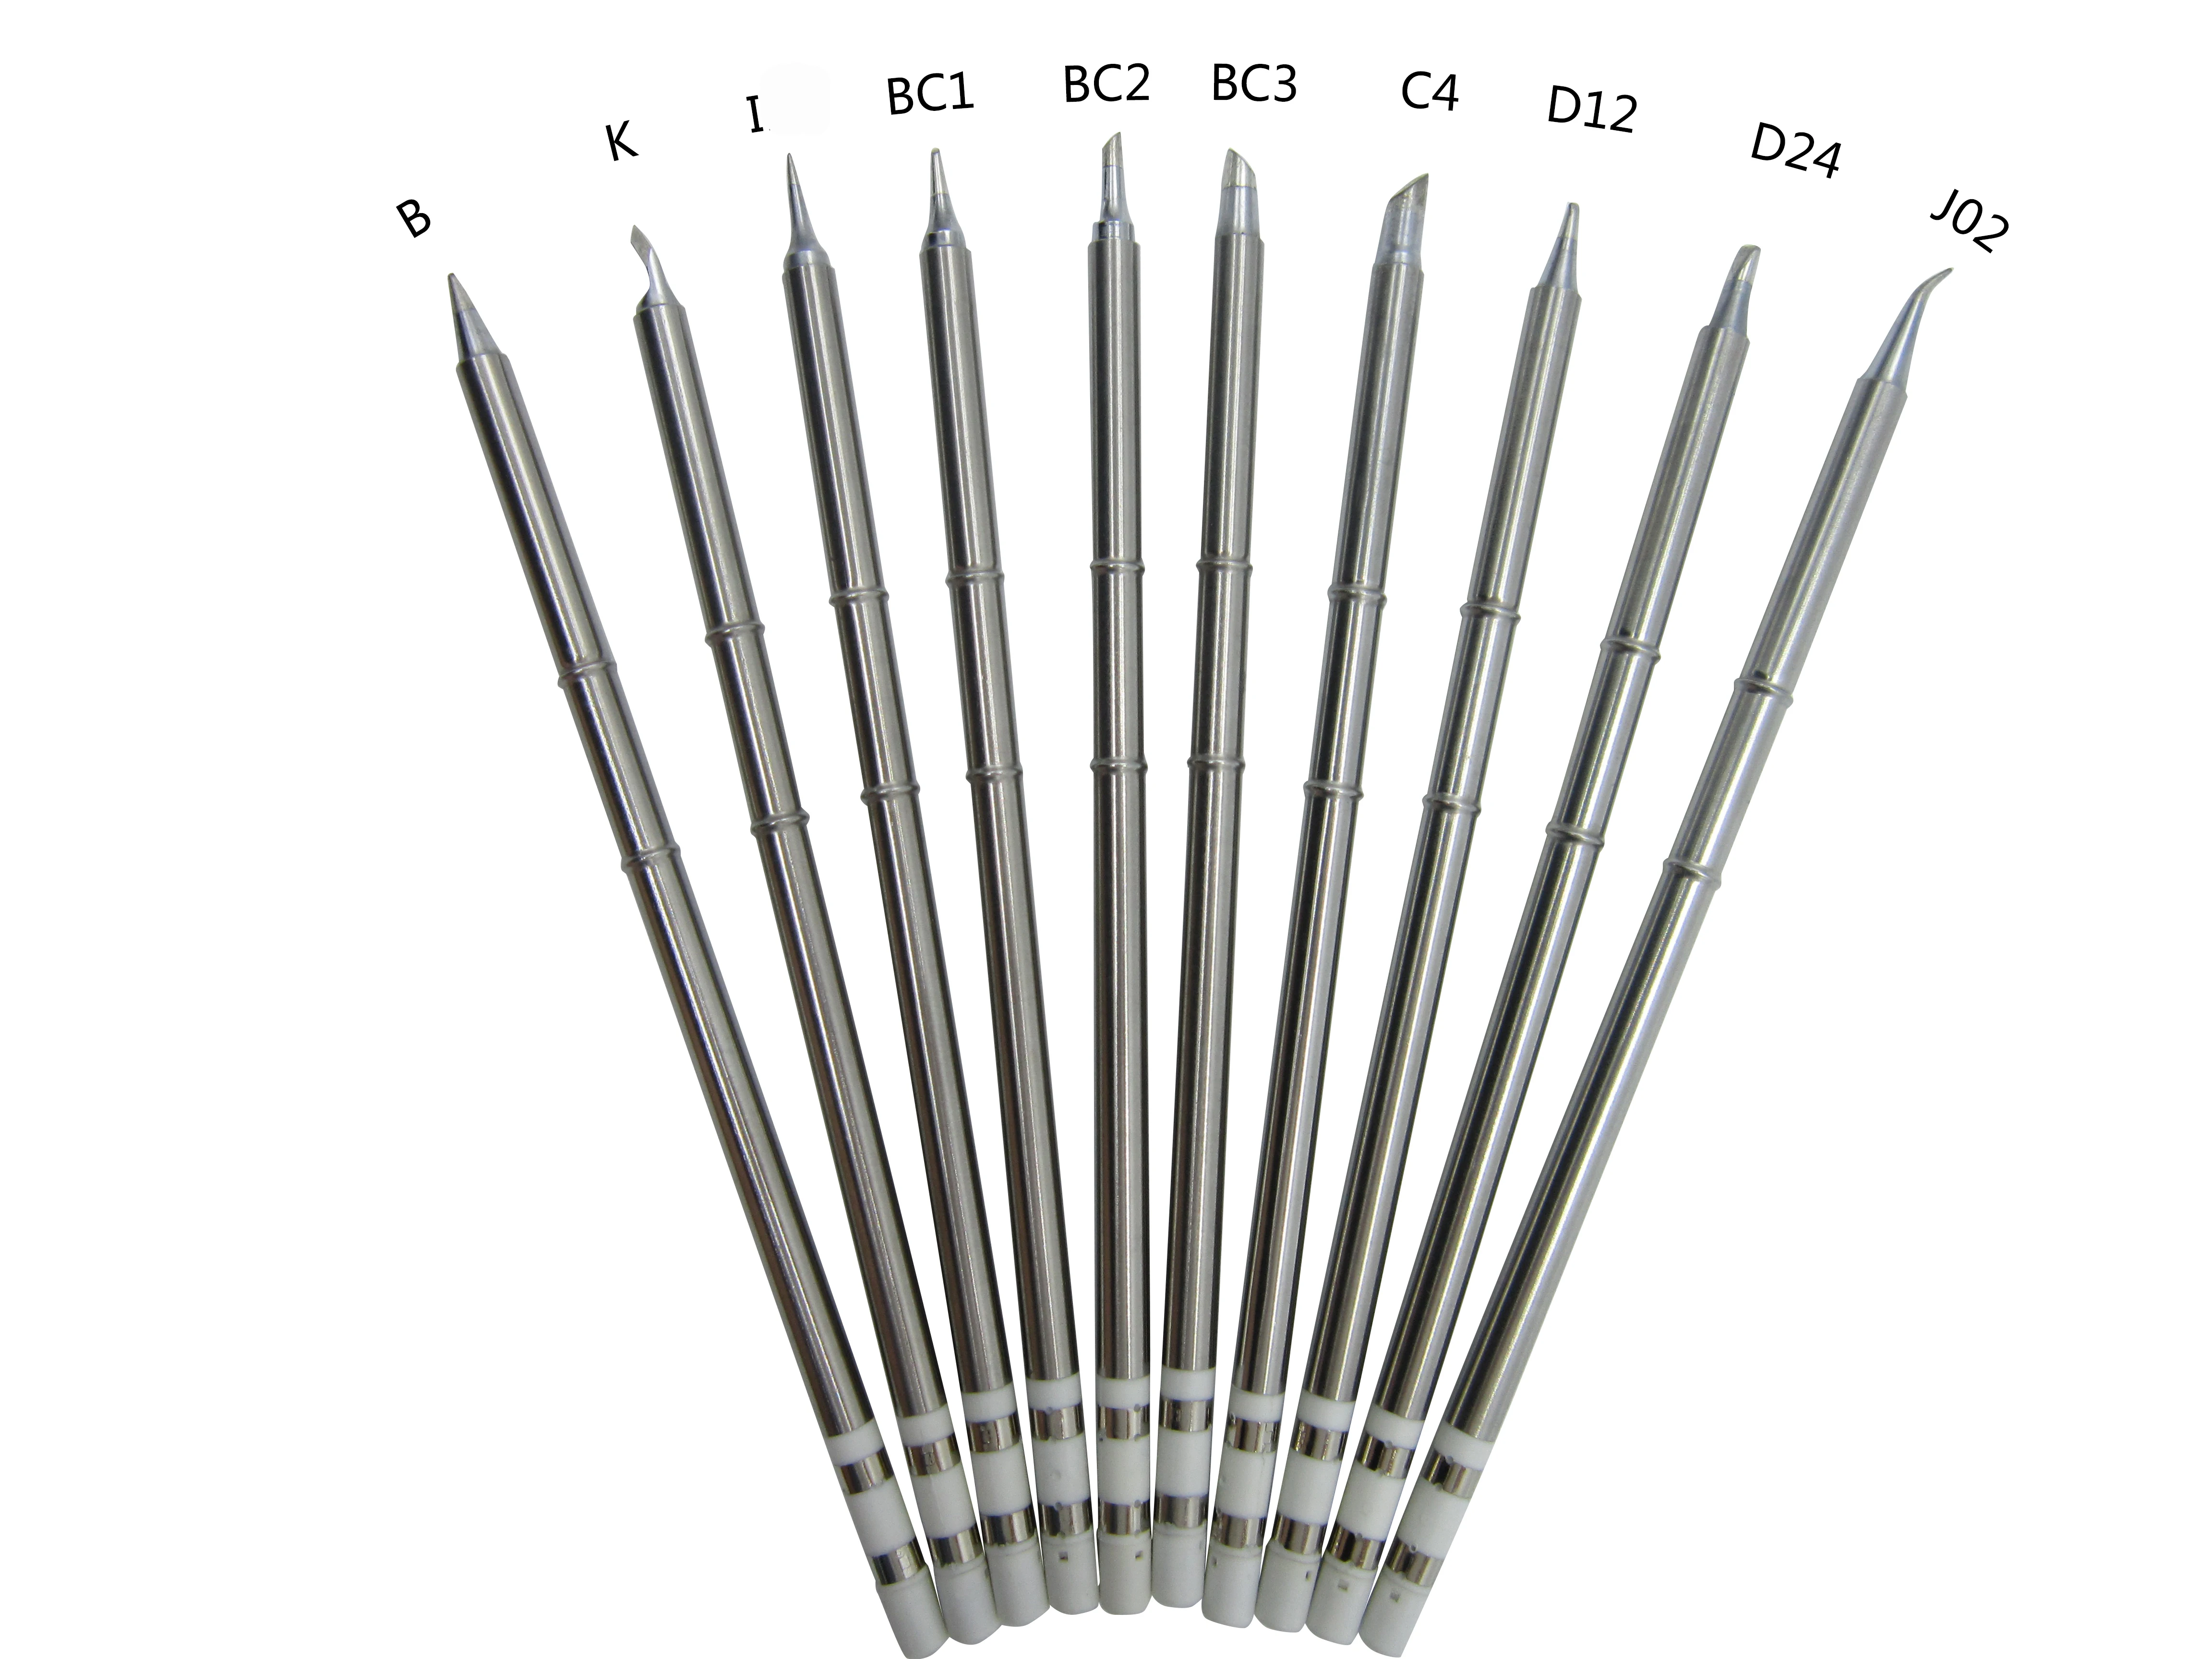 

10 Pieces T12 Series Replacement Soldering Tips Fit Hakko FX-951 FX-950 FX-952 FX-9501 FM-2028 FM2027 Iron Handle Pencil Bit